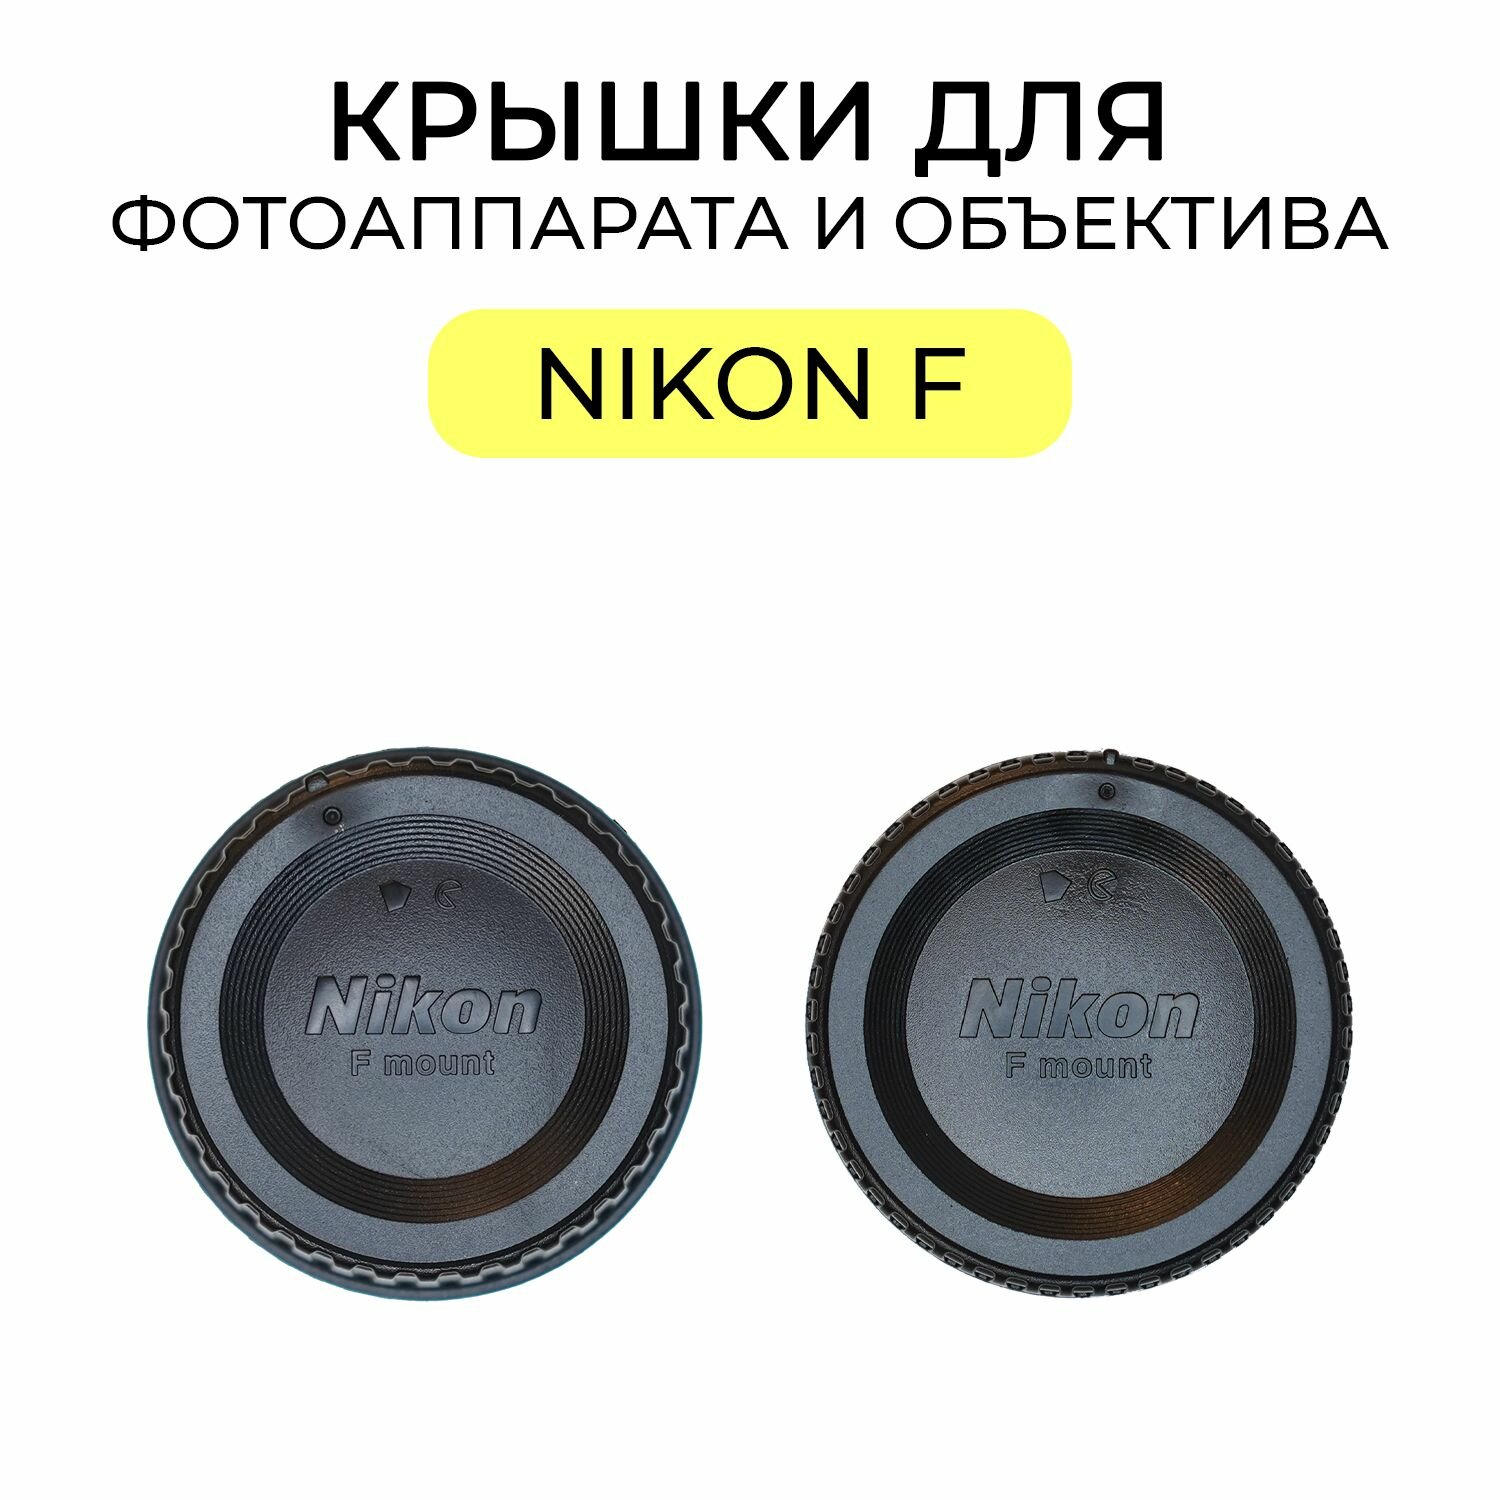 Комплект крышек для фотоаппарата и объектива с байонетом Nikon